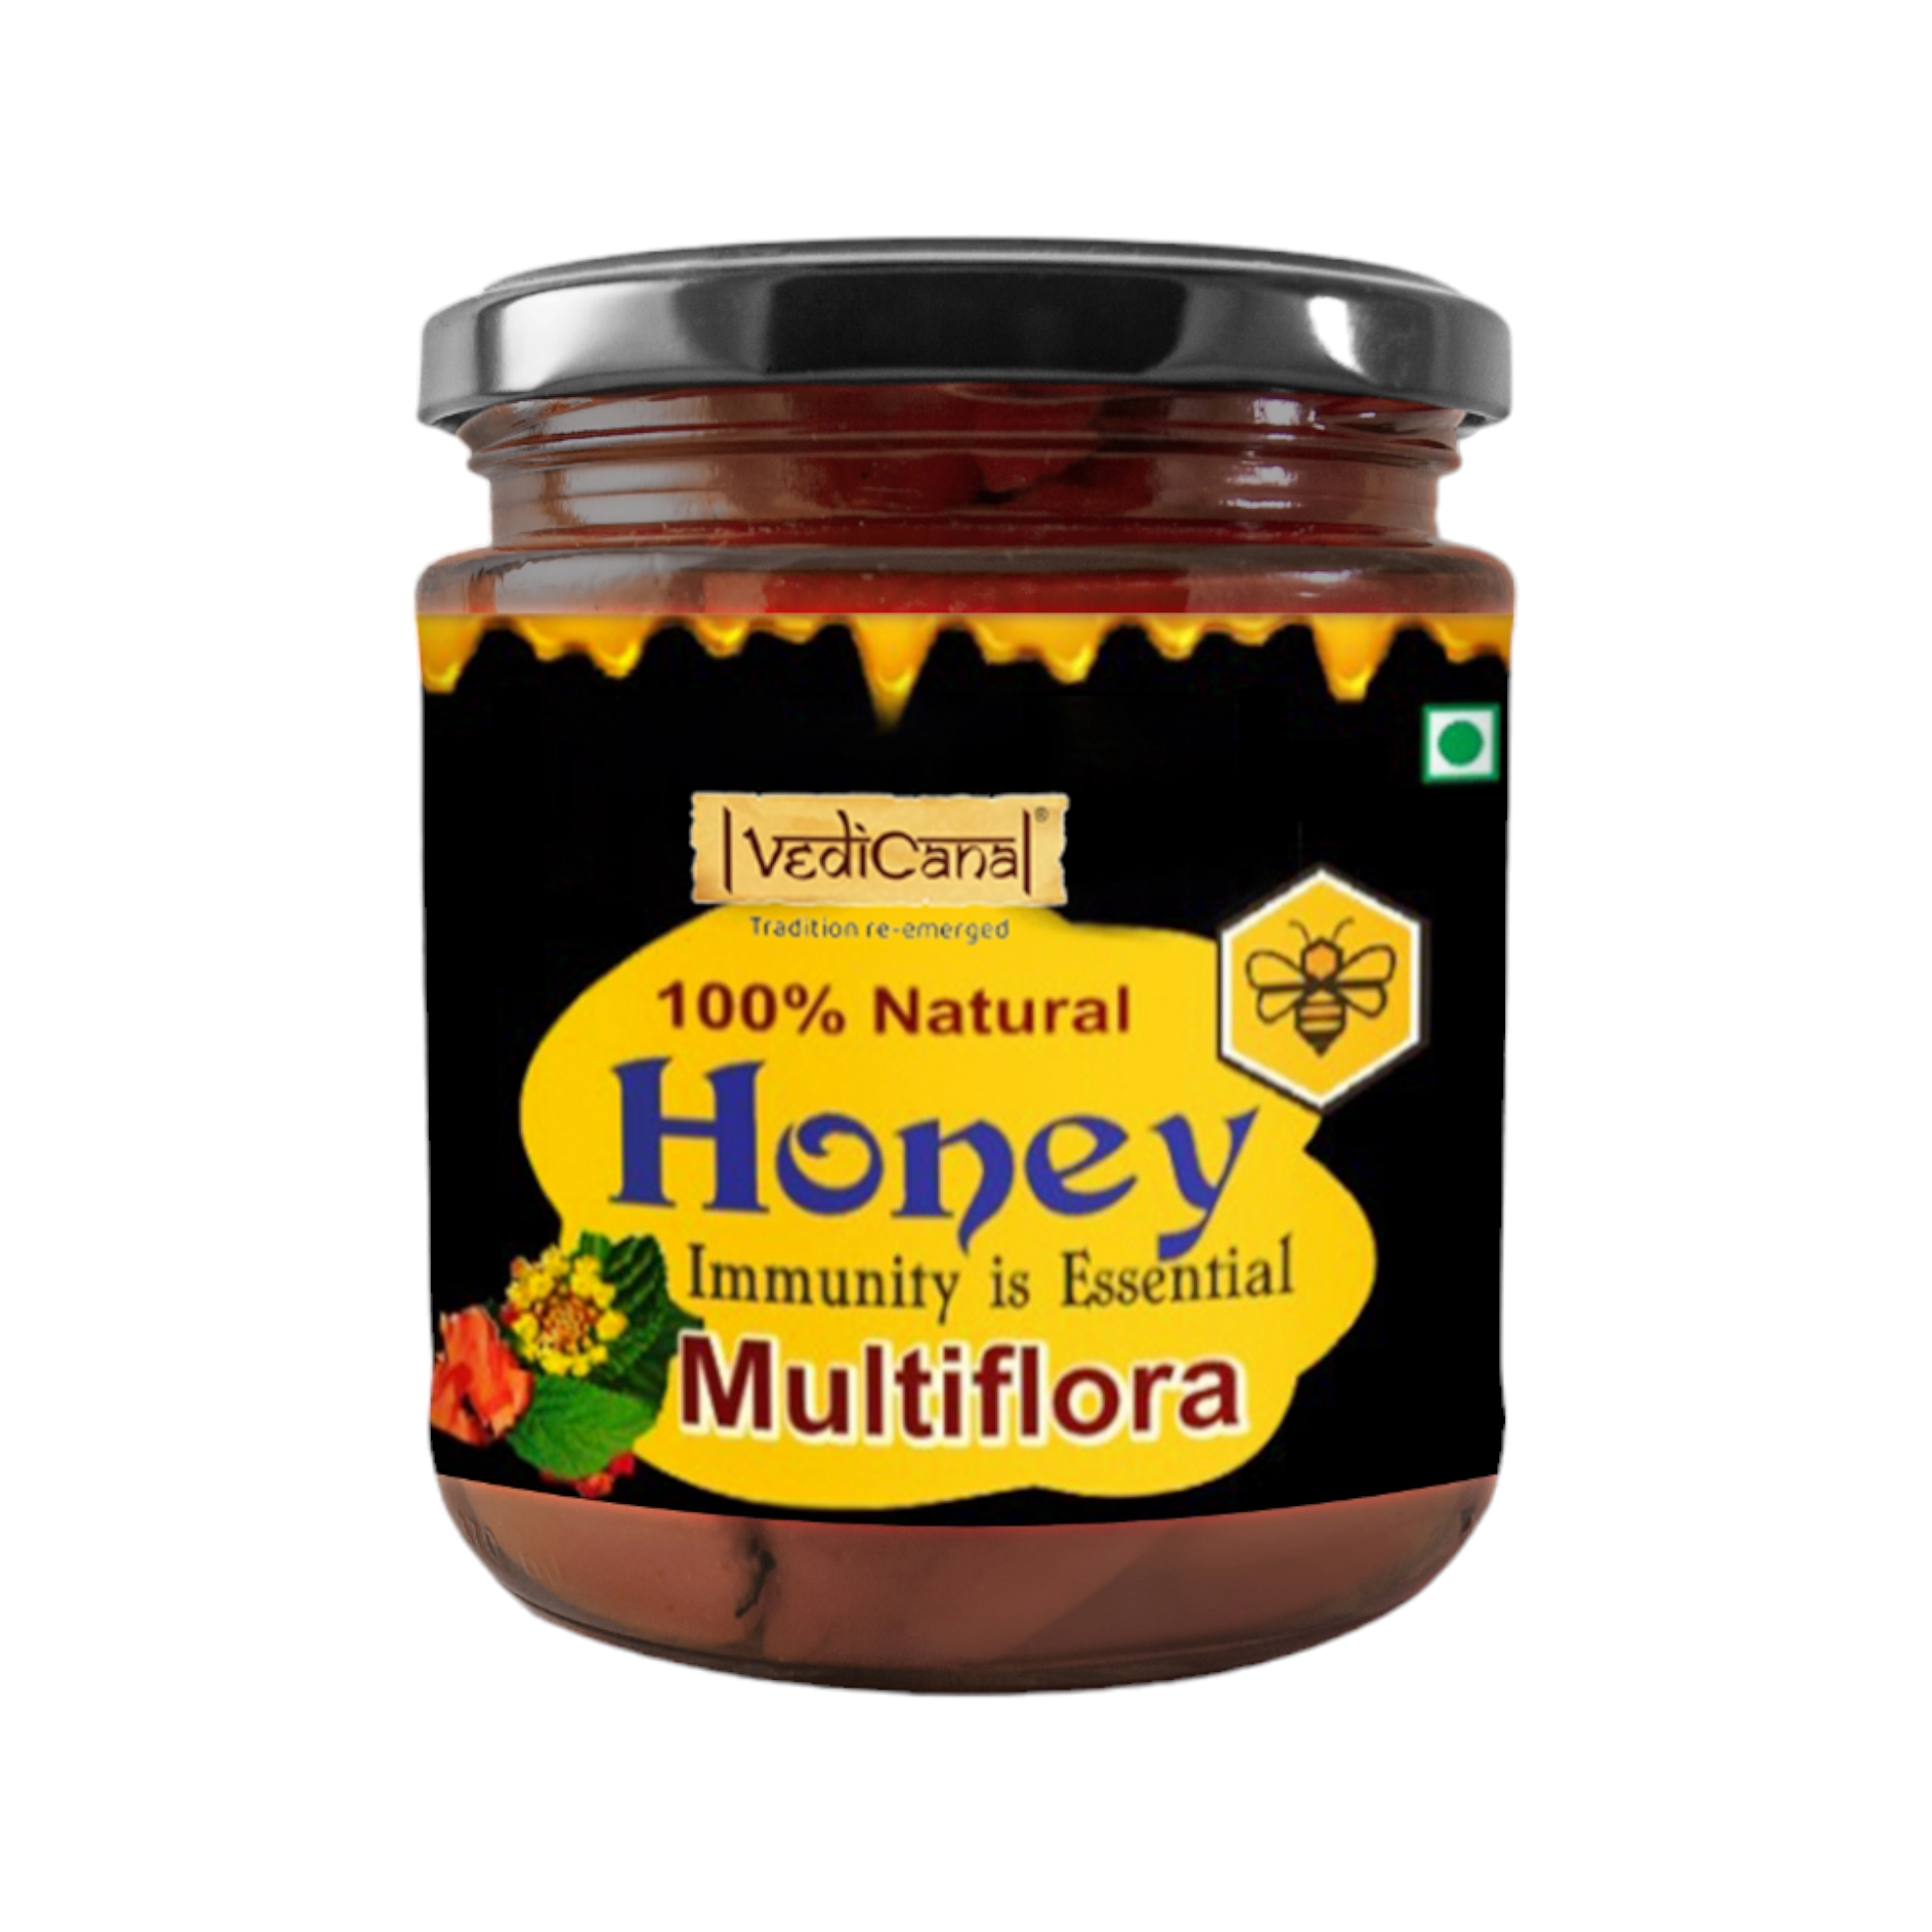 VediCana Multiflora Honey